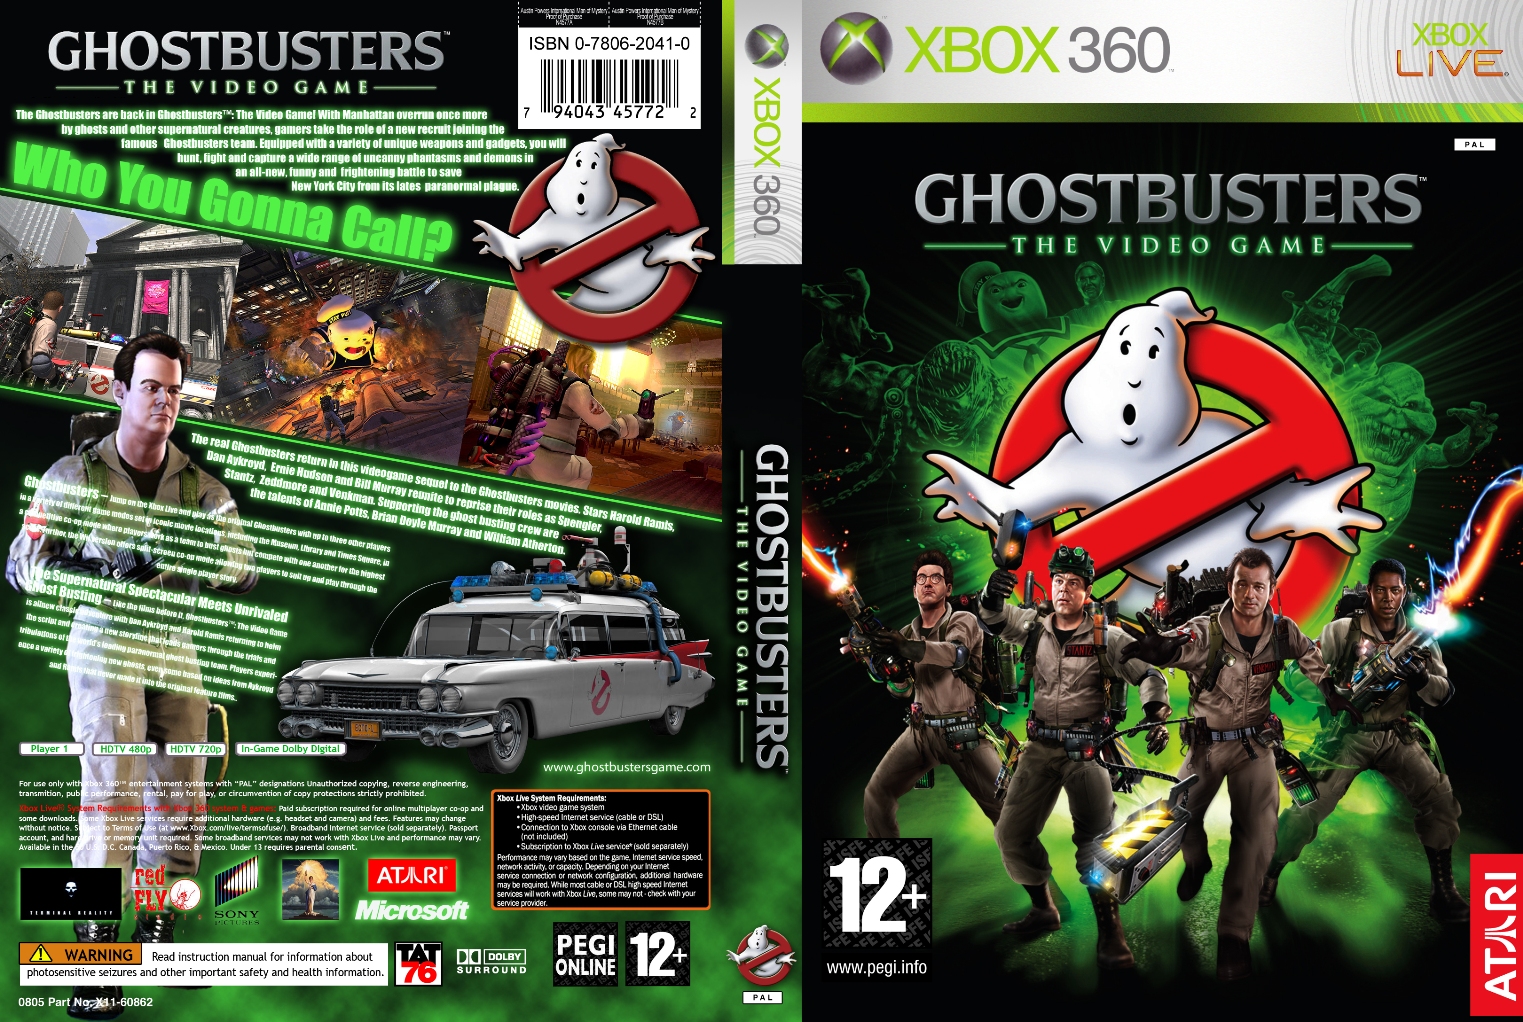 Игры на хвох. GHOSTBUSTERS игра хбокс 360. Охотники за привидениями Xbox 360. Игра Xbox 360 gans. Охотники за привидениями игры хбокс 360.